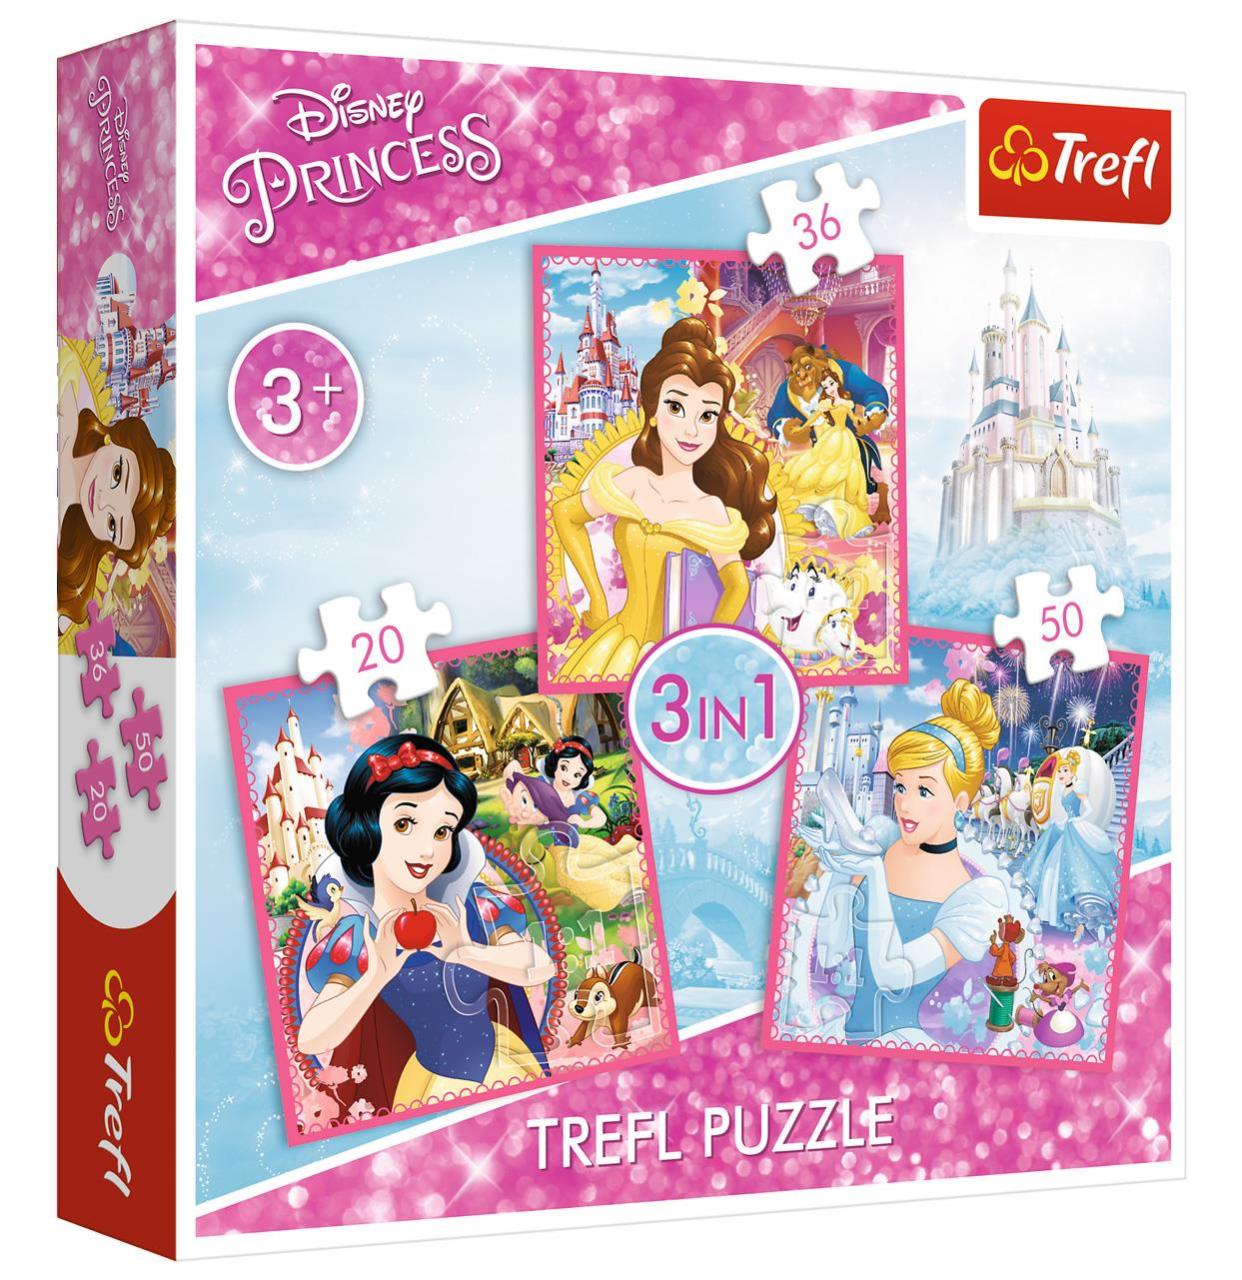 Trefl Puzzle The Enchanted World Of Princess 3'lü 20+36+50 Parça Yapboz